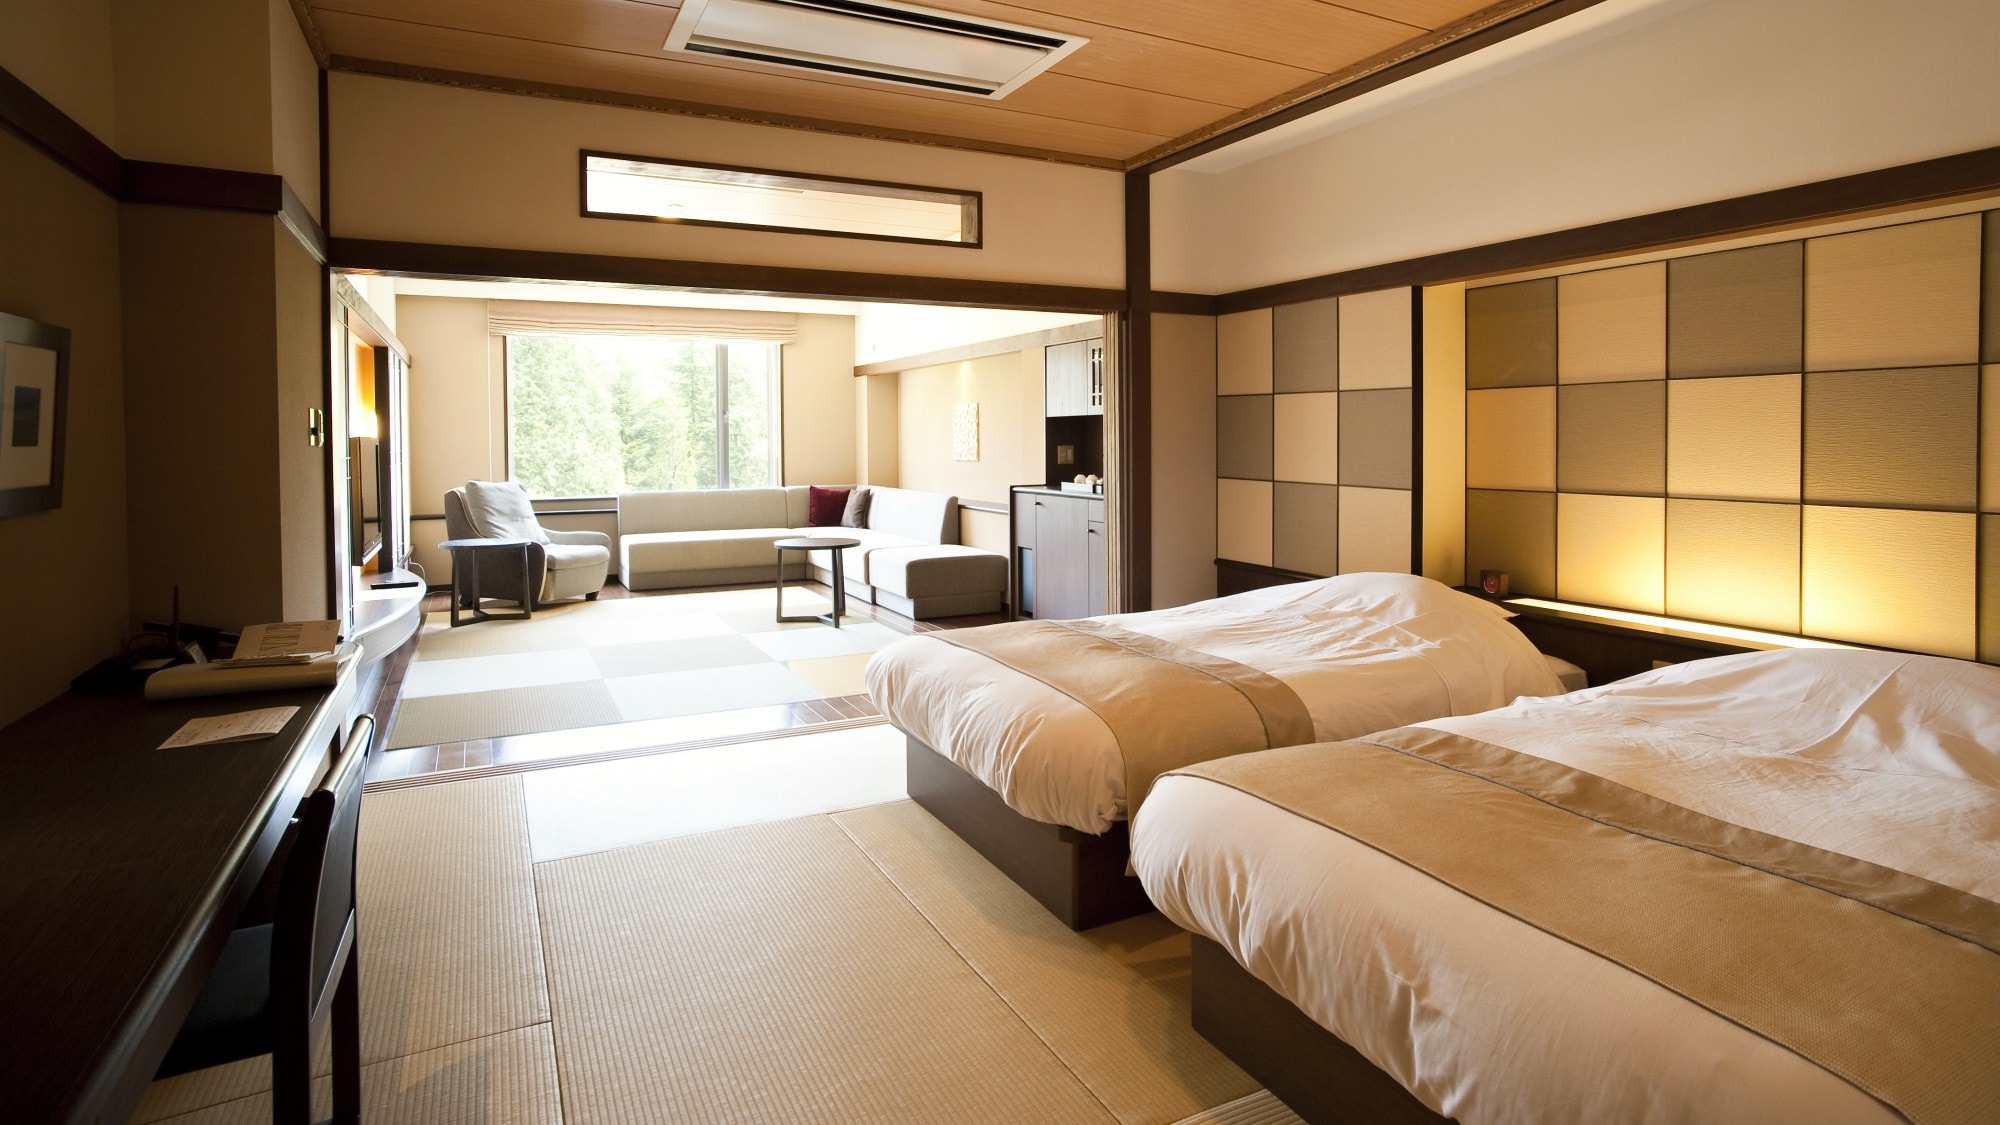 Kamar bergaya Jepang-Barat / Kamar dengan ukuran 50 meter persegi atau lebih, di mana Anda dapat menghabiskan waktu santai dan nyaman (contoh kamar tamu)